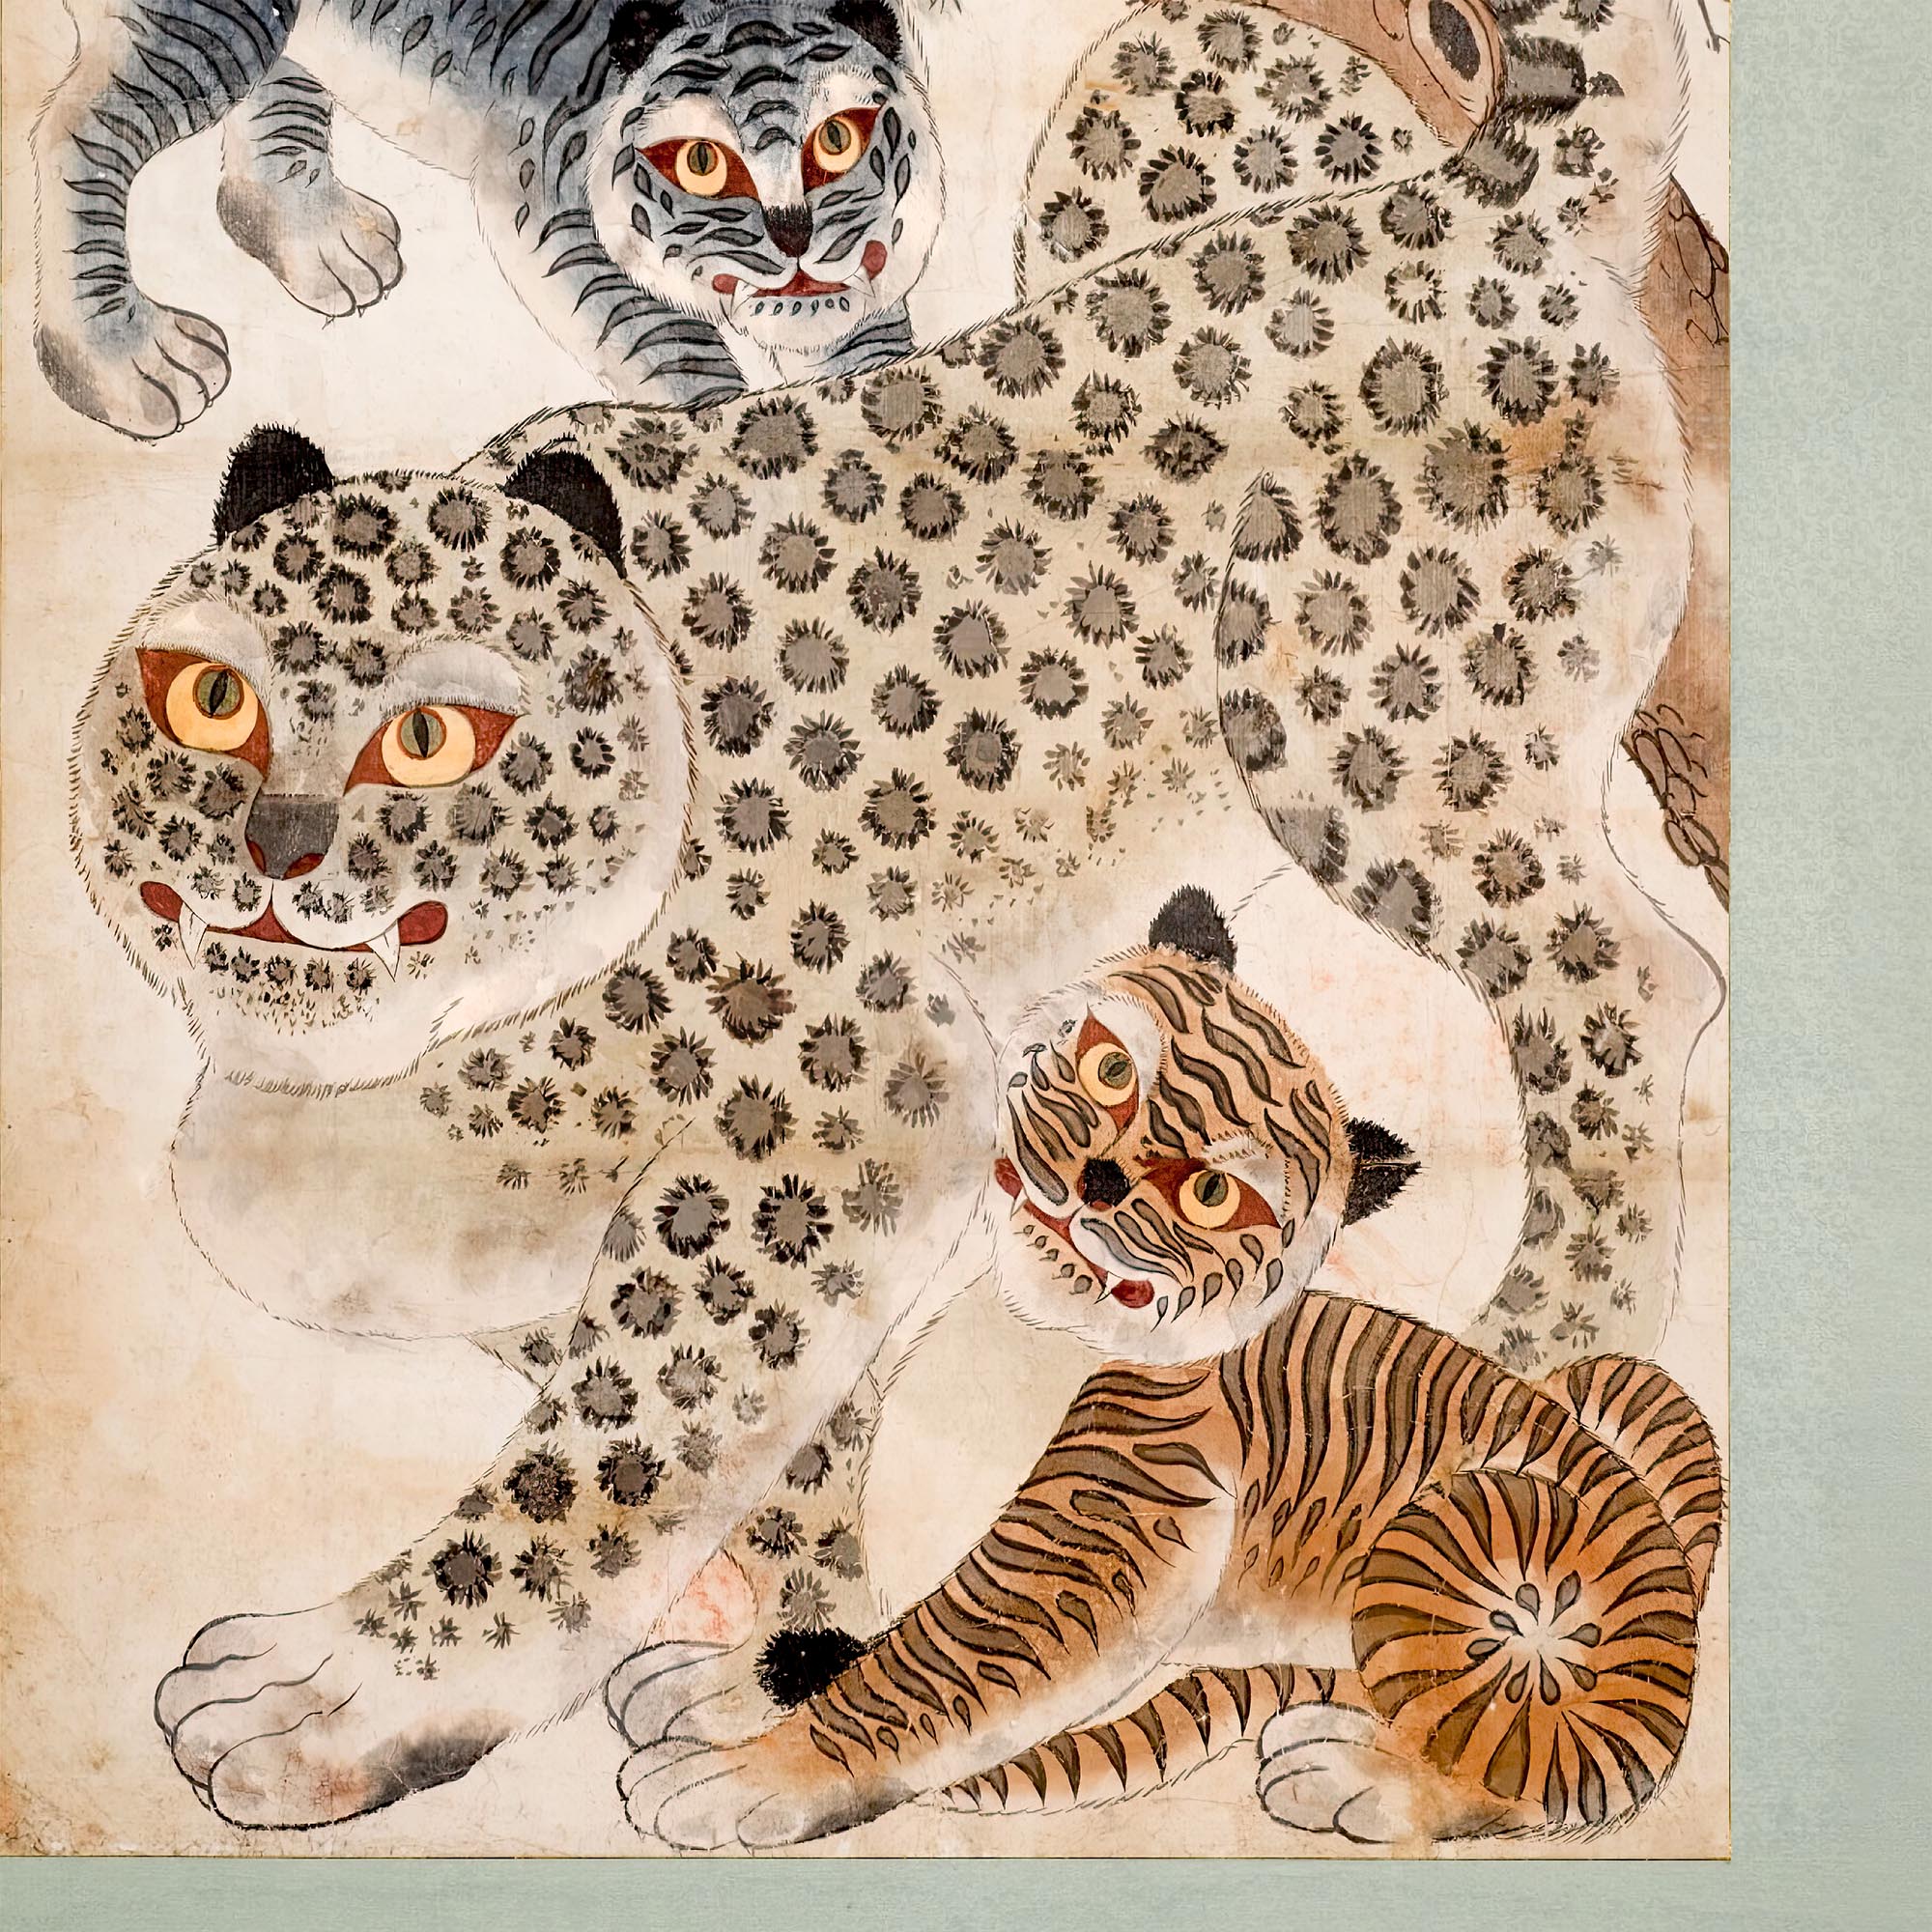 Fine art Framed Minhwa Tiger, Leopard Korean Folk Art | Asian Wildlife Nature Jungle | Kid's Room Nursery Framed Art Print